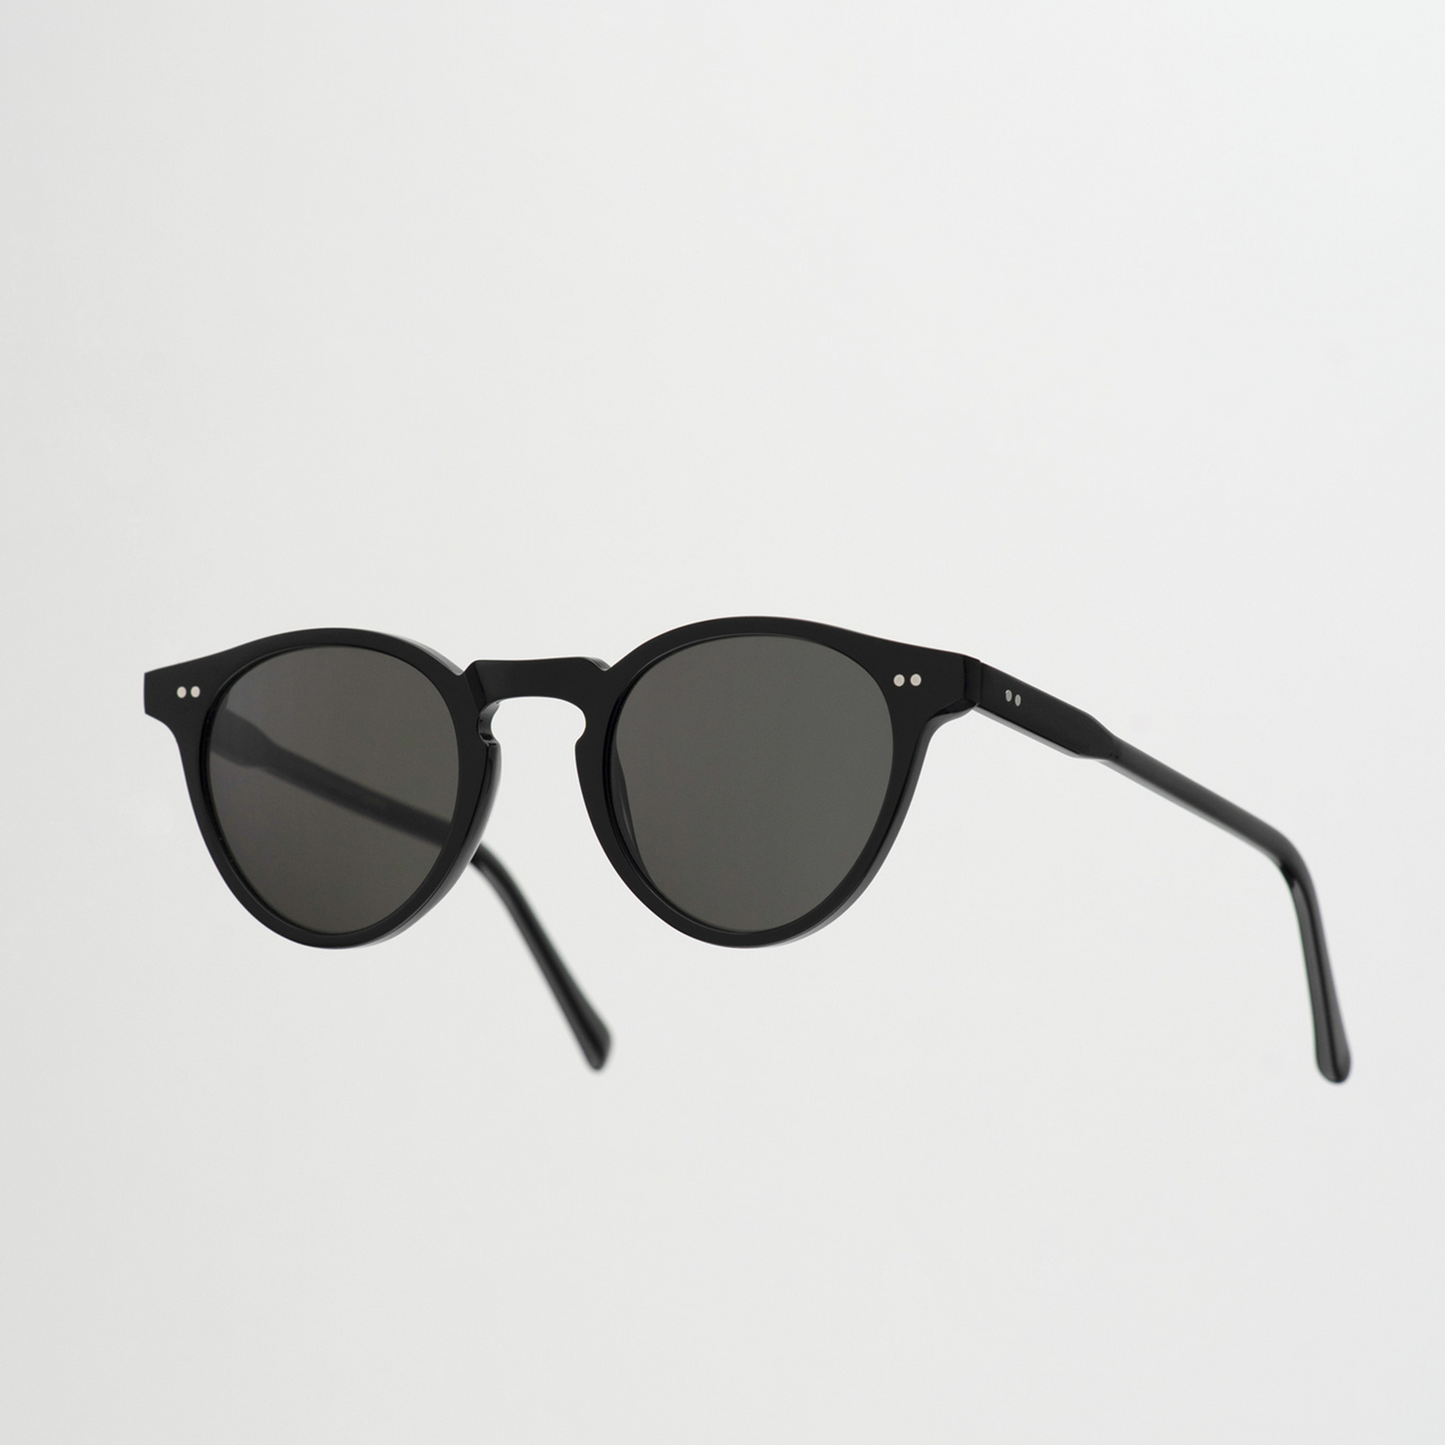 Monokel Forest Sunglasses